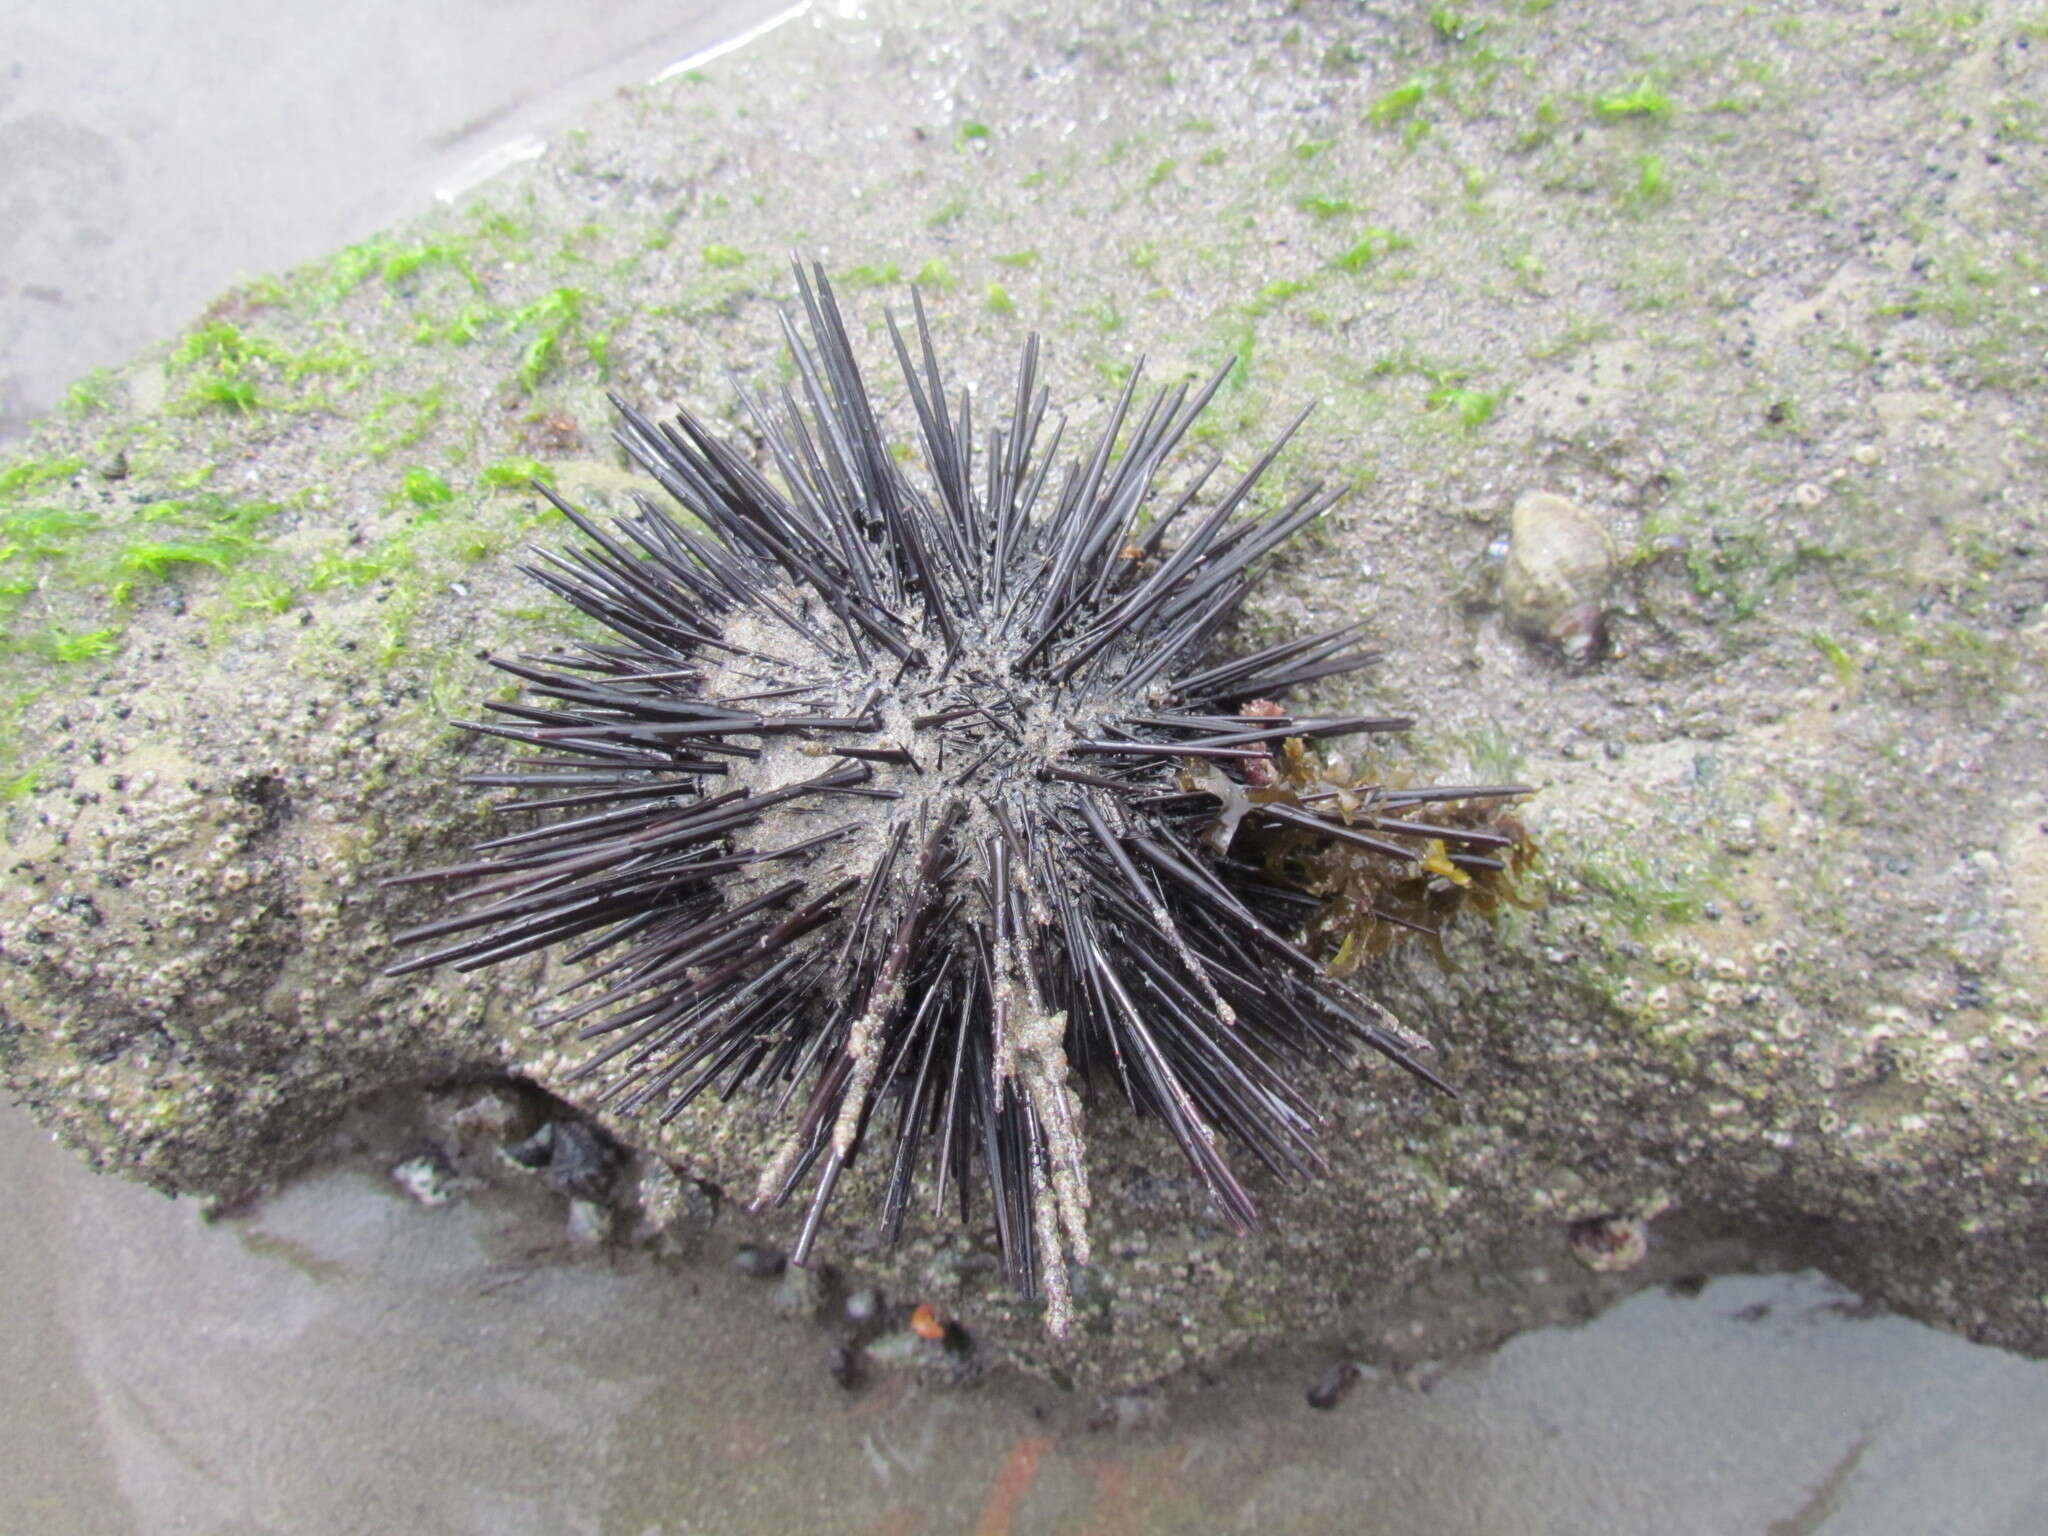 Image of rock urchin